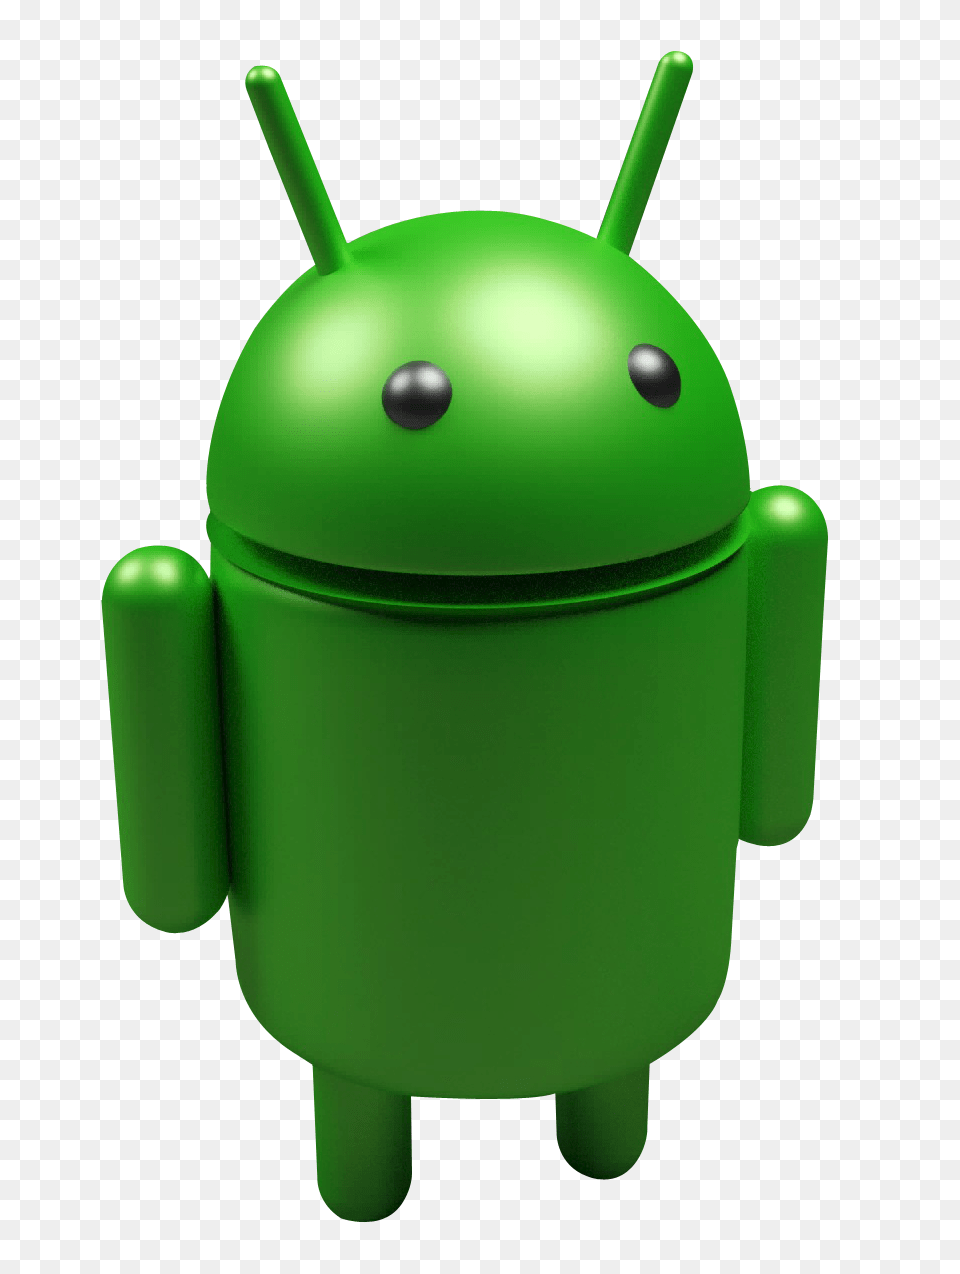 Pngpix Com Android Image, Green, Robot Free Transparent Png